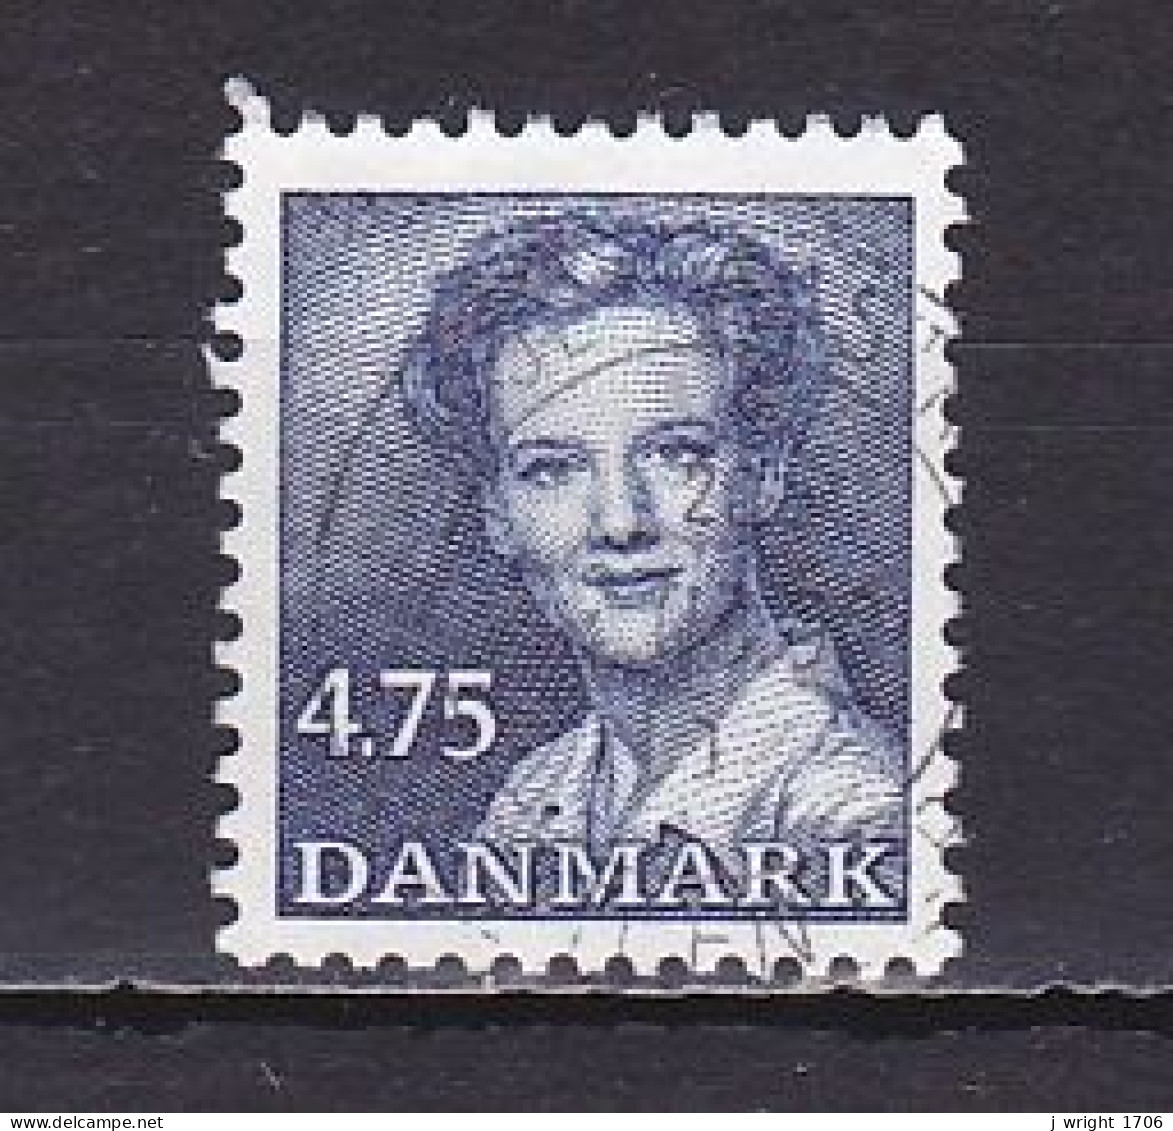 Denmark, 1990, Queen Margrethe II, 4.75kr, USED - Oblitérés